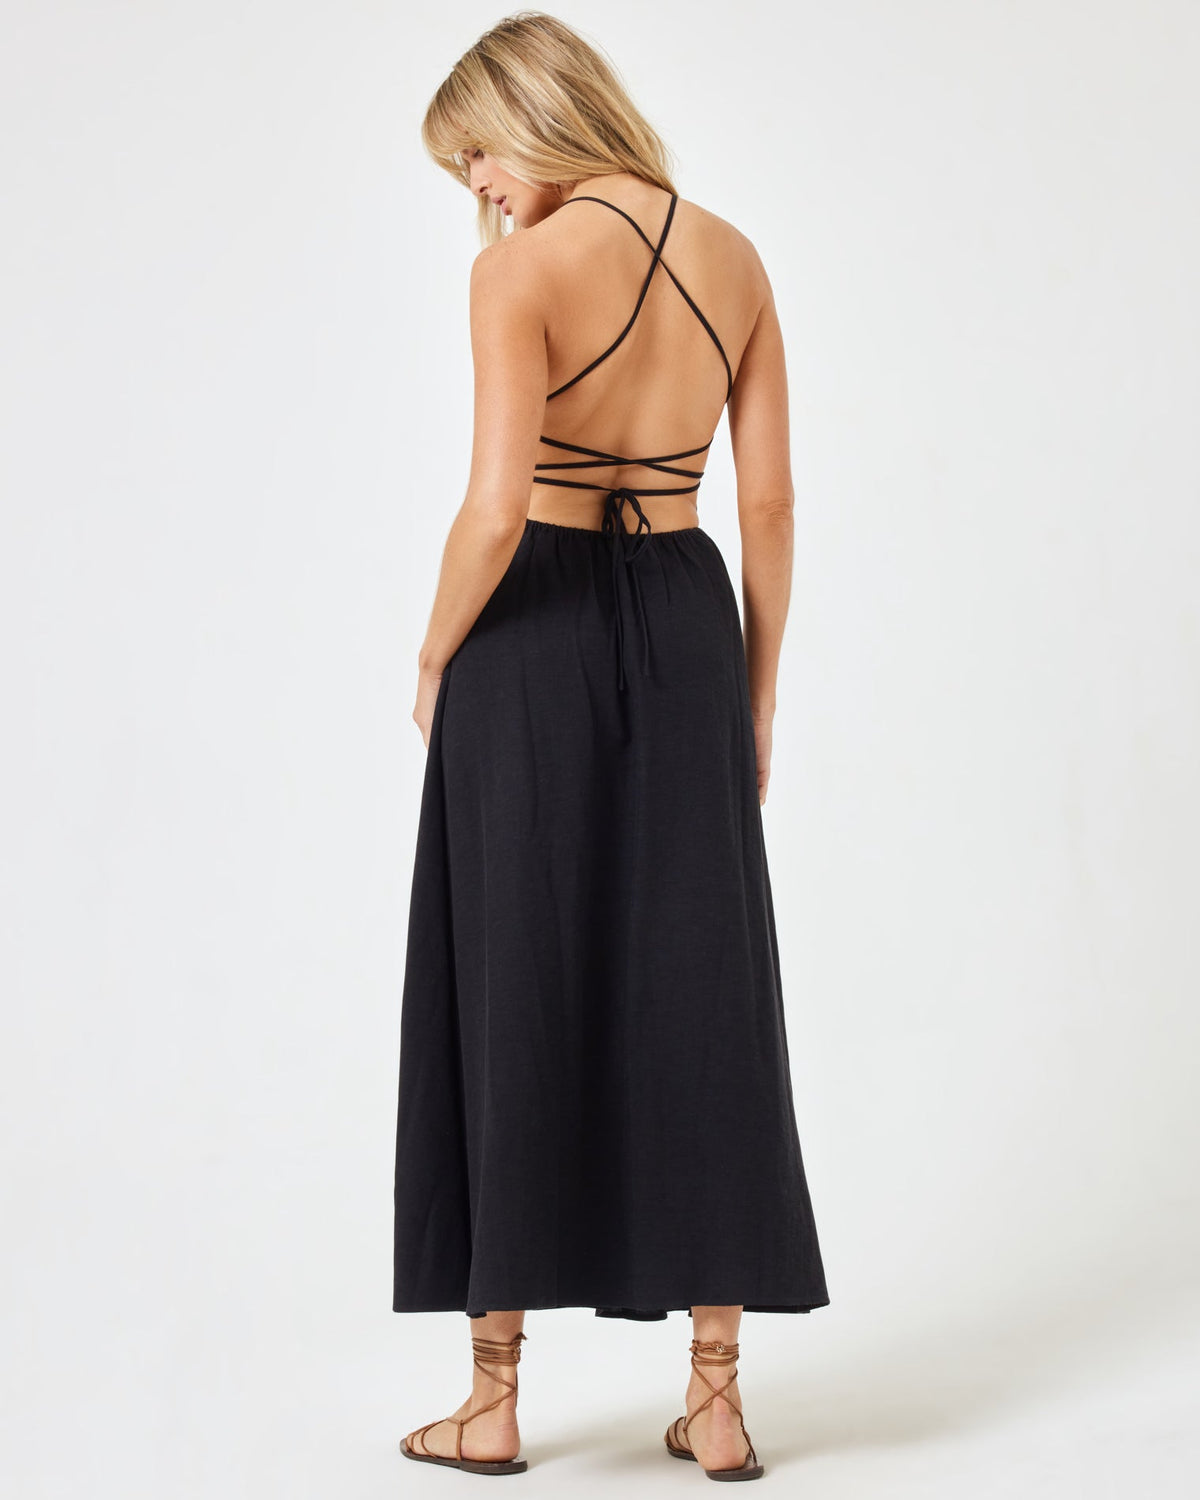 Playa Vista Dress - Black Black | Model: Lura (size: S)